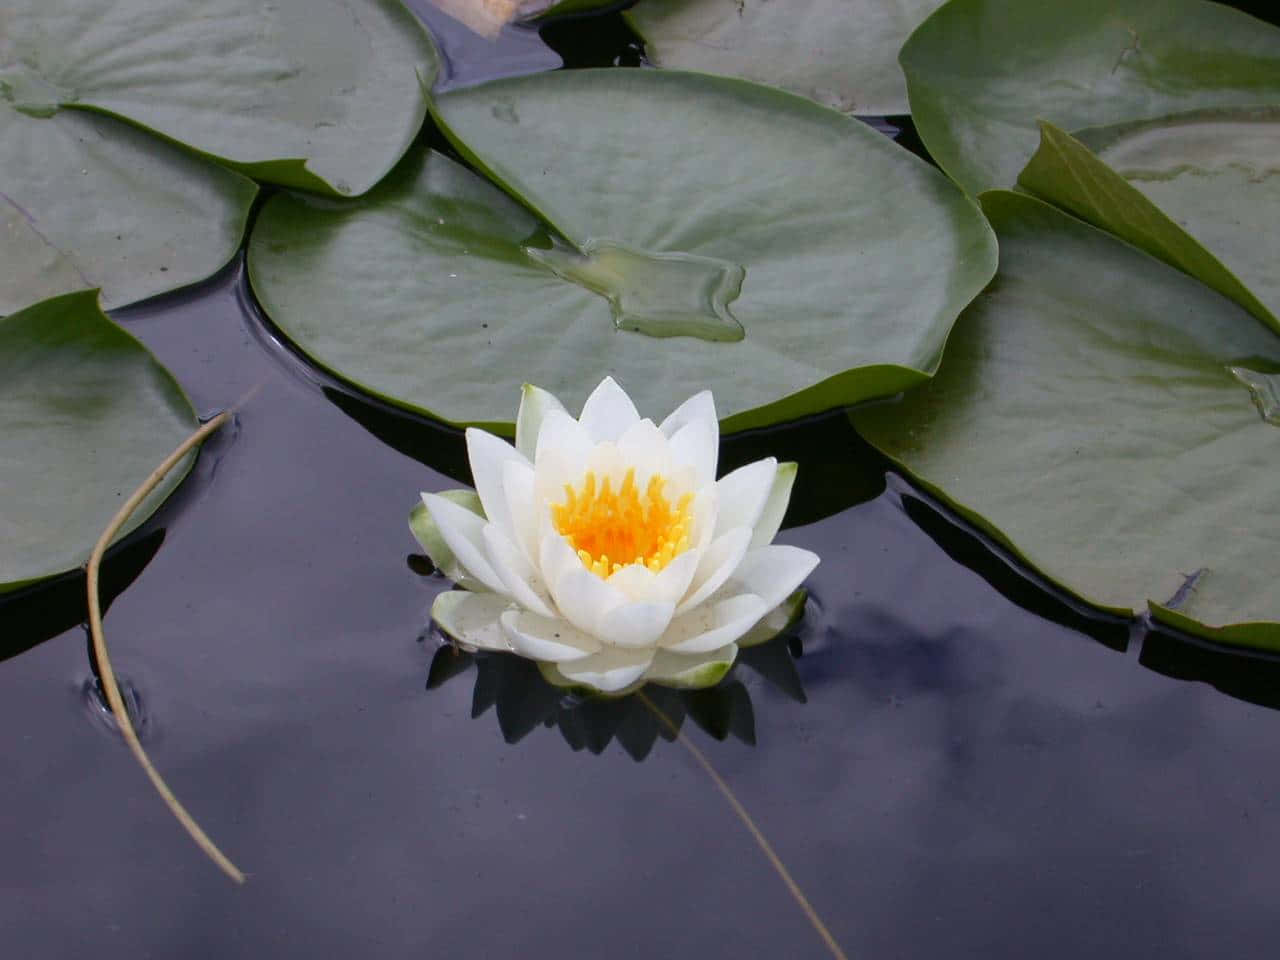 A beautiful lotus flower floating in graceful peace